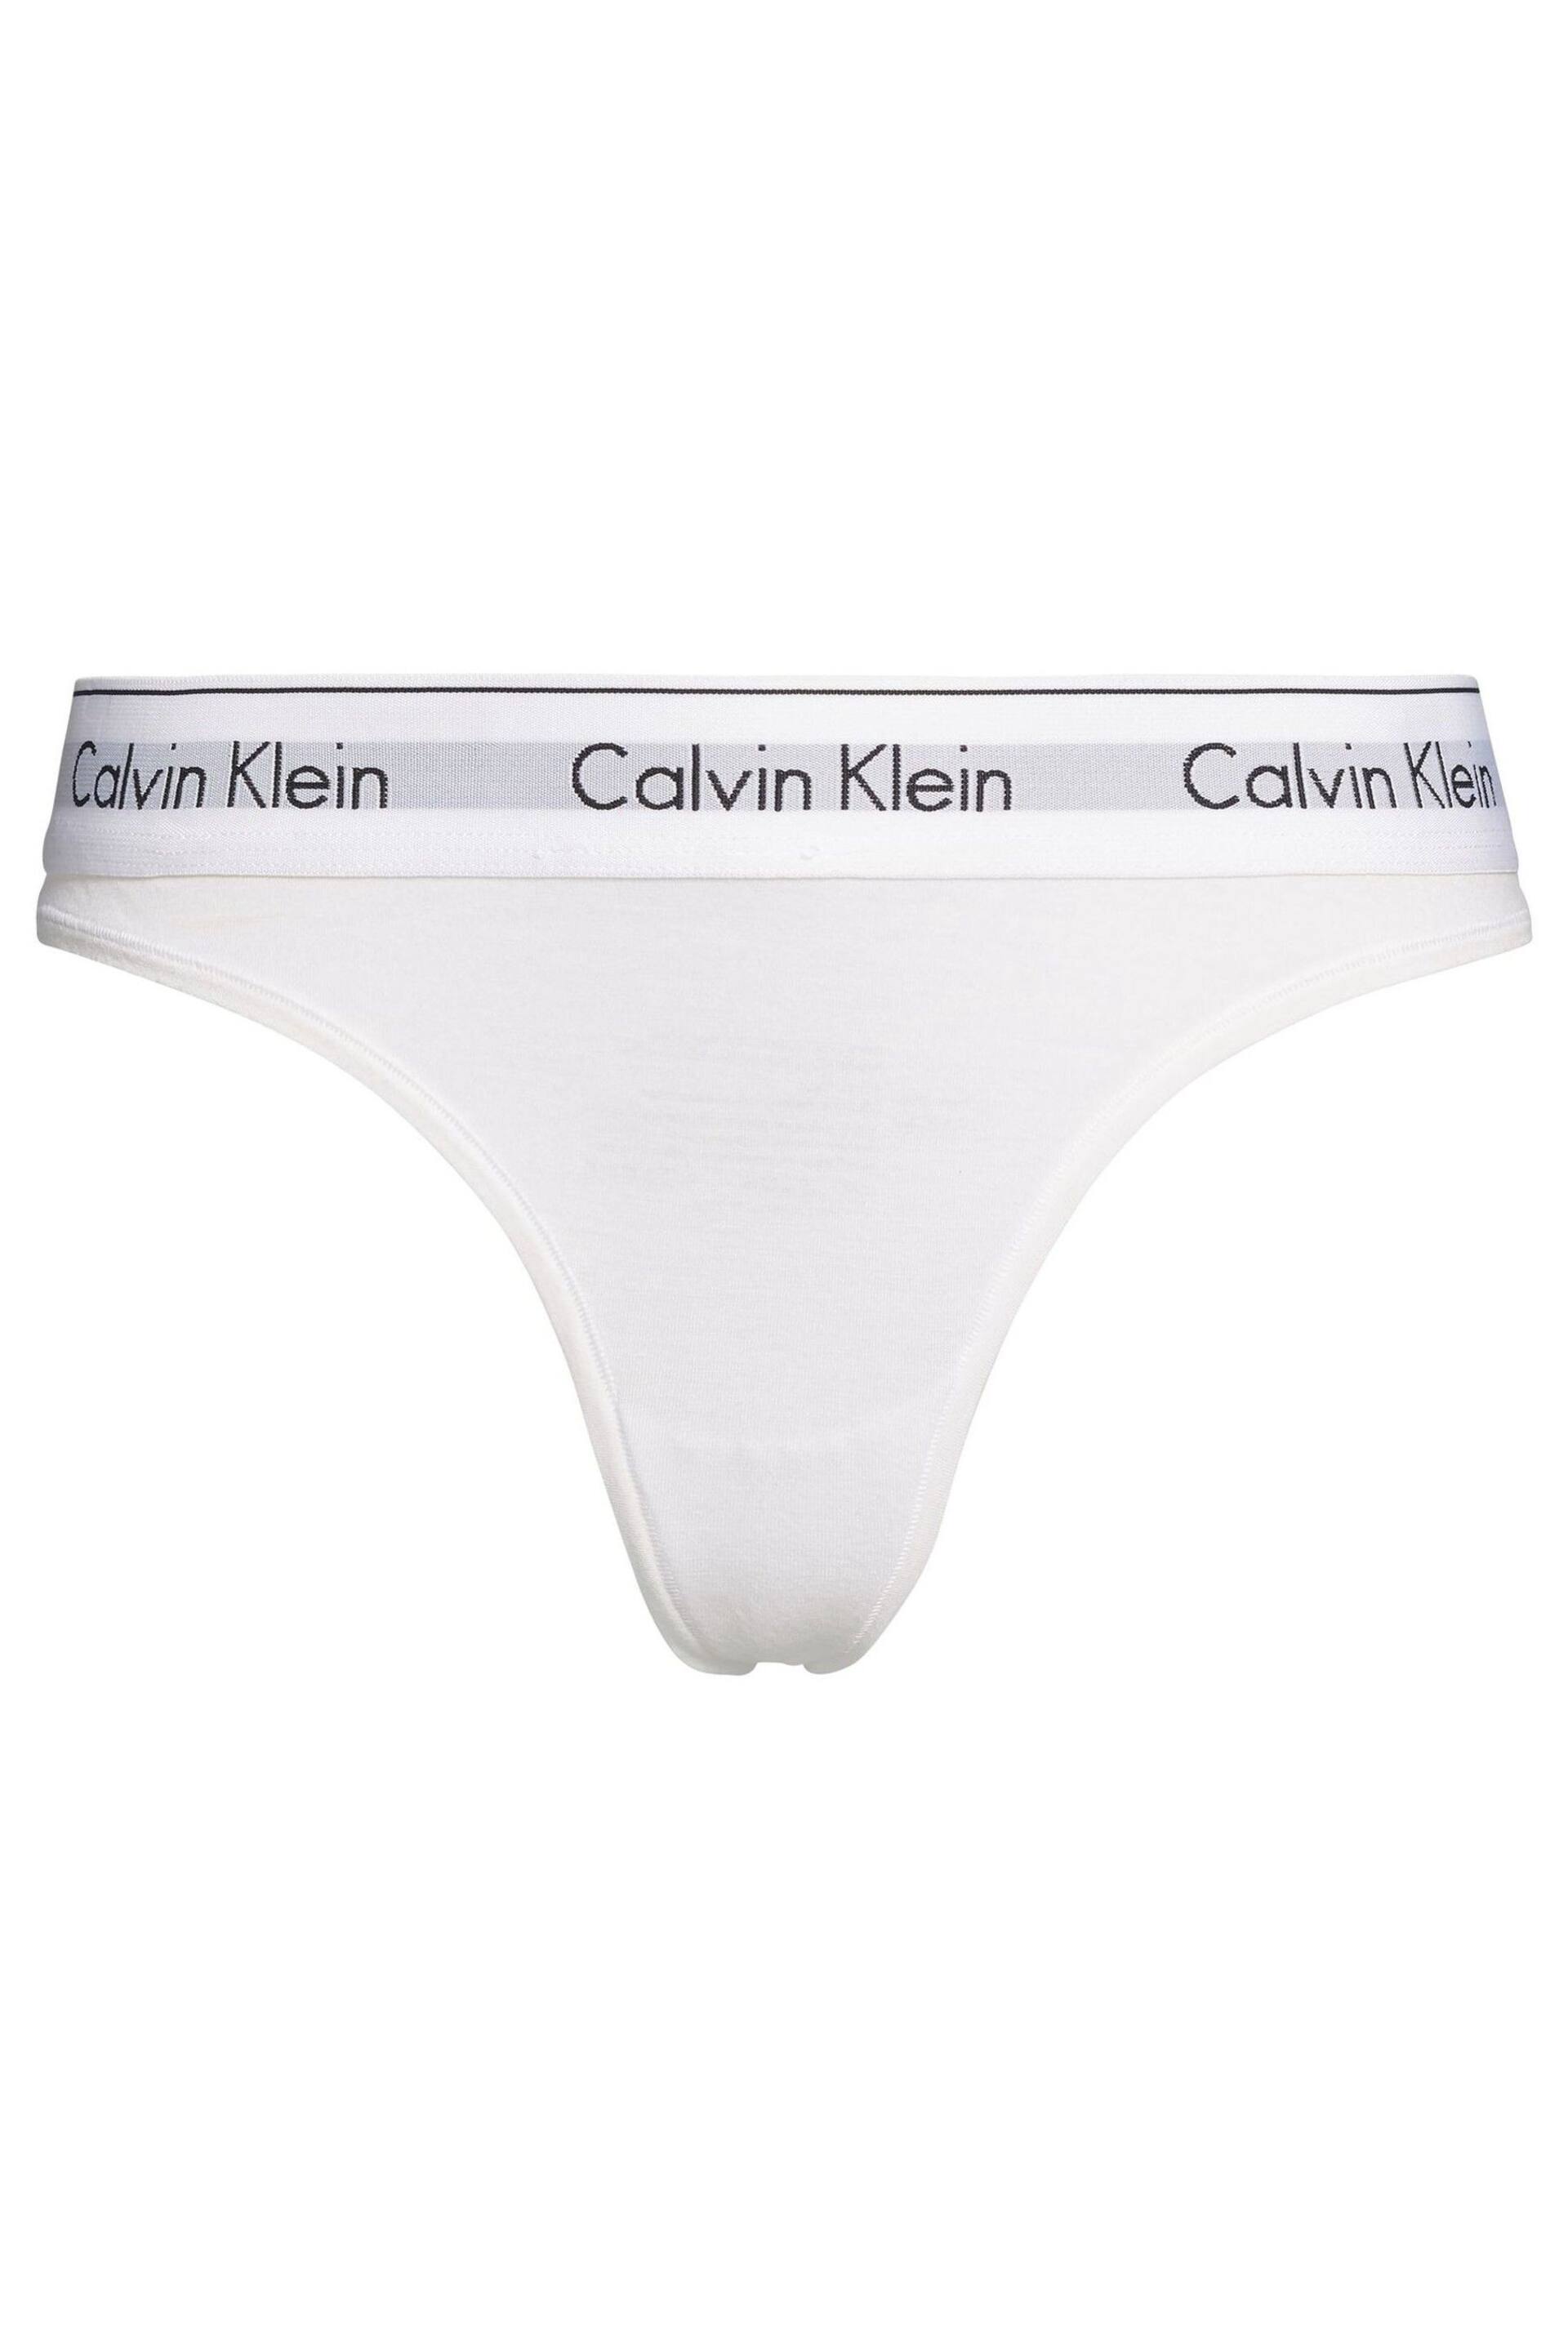 Calvin Klein White Modern Cotton Thong - Image 4 of 4